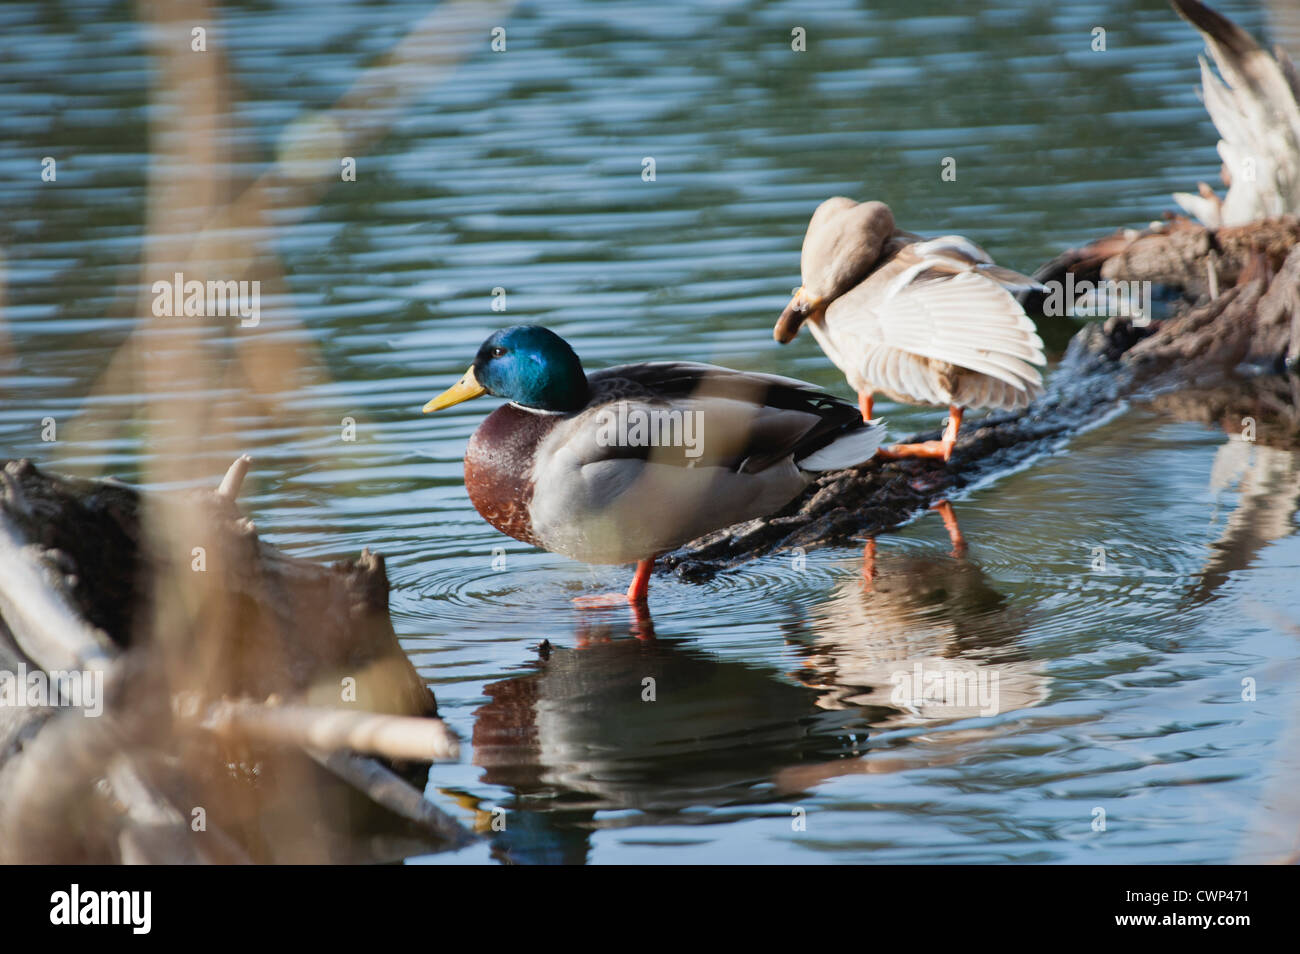 Male and female Mallard ducks in shallow water Stock Photo